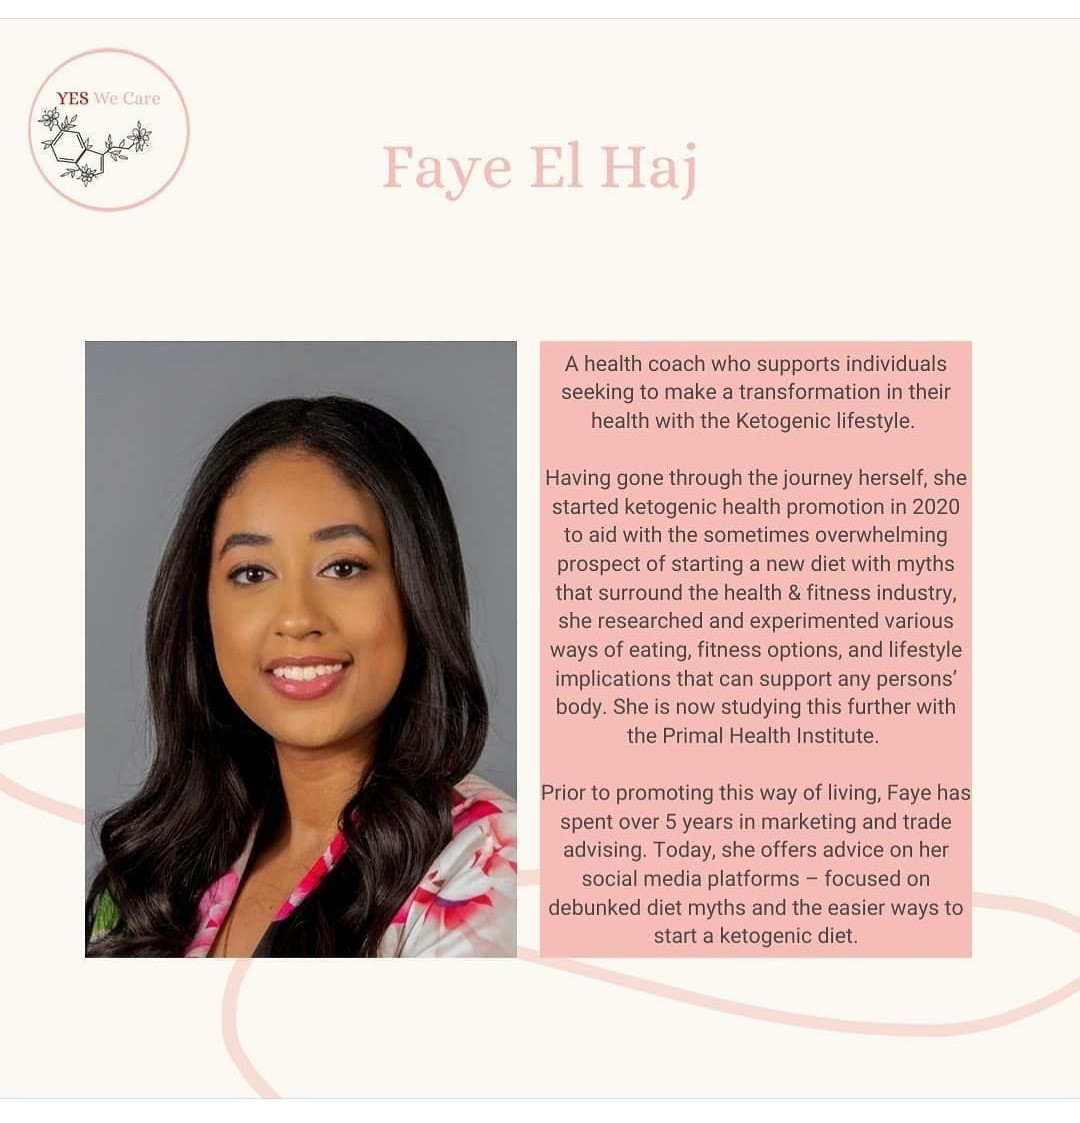 Faye El Haj